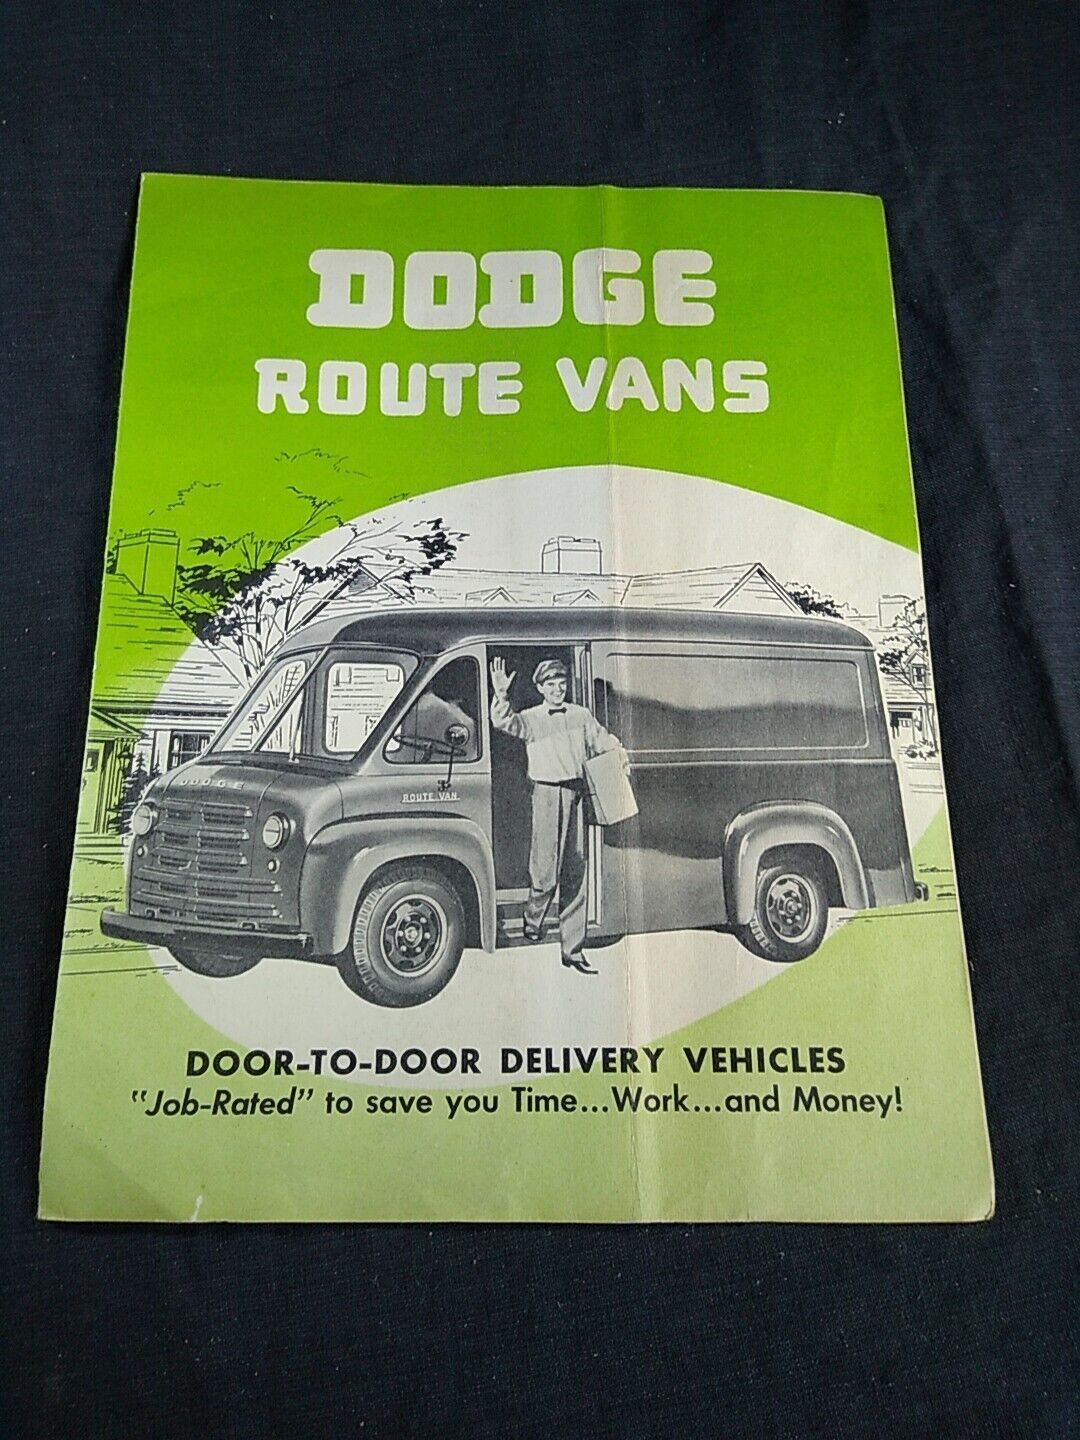 1951 Dodge Route Vans, Original Sales Literature Brochure Flyer Delivery Vehicle